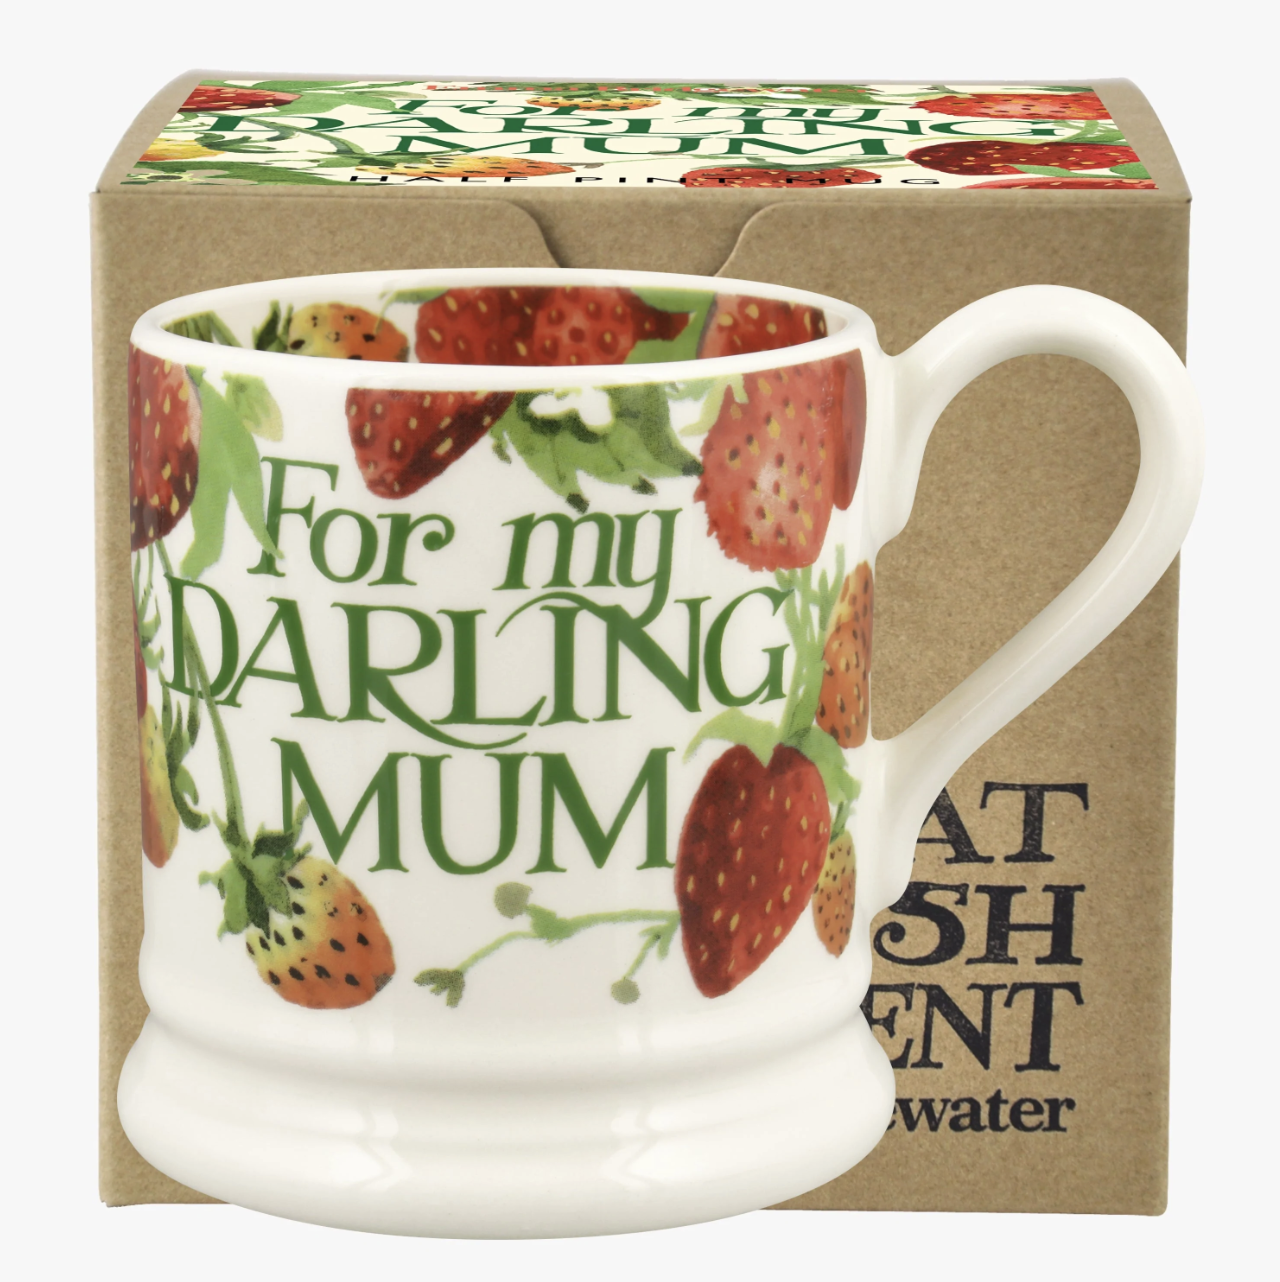 Emma Bridgewater Strawberries Darling Mum 1/2 Pint Mug Boxed